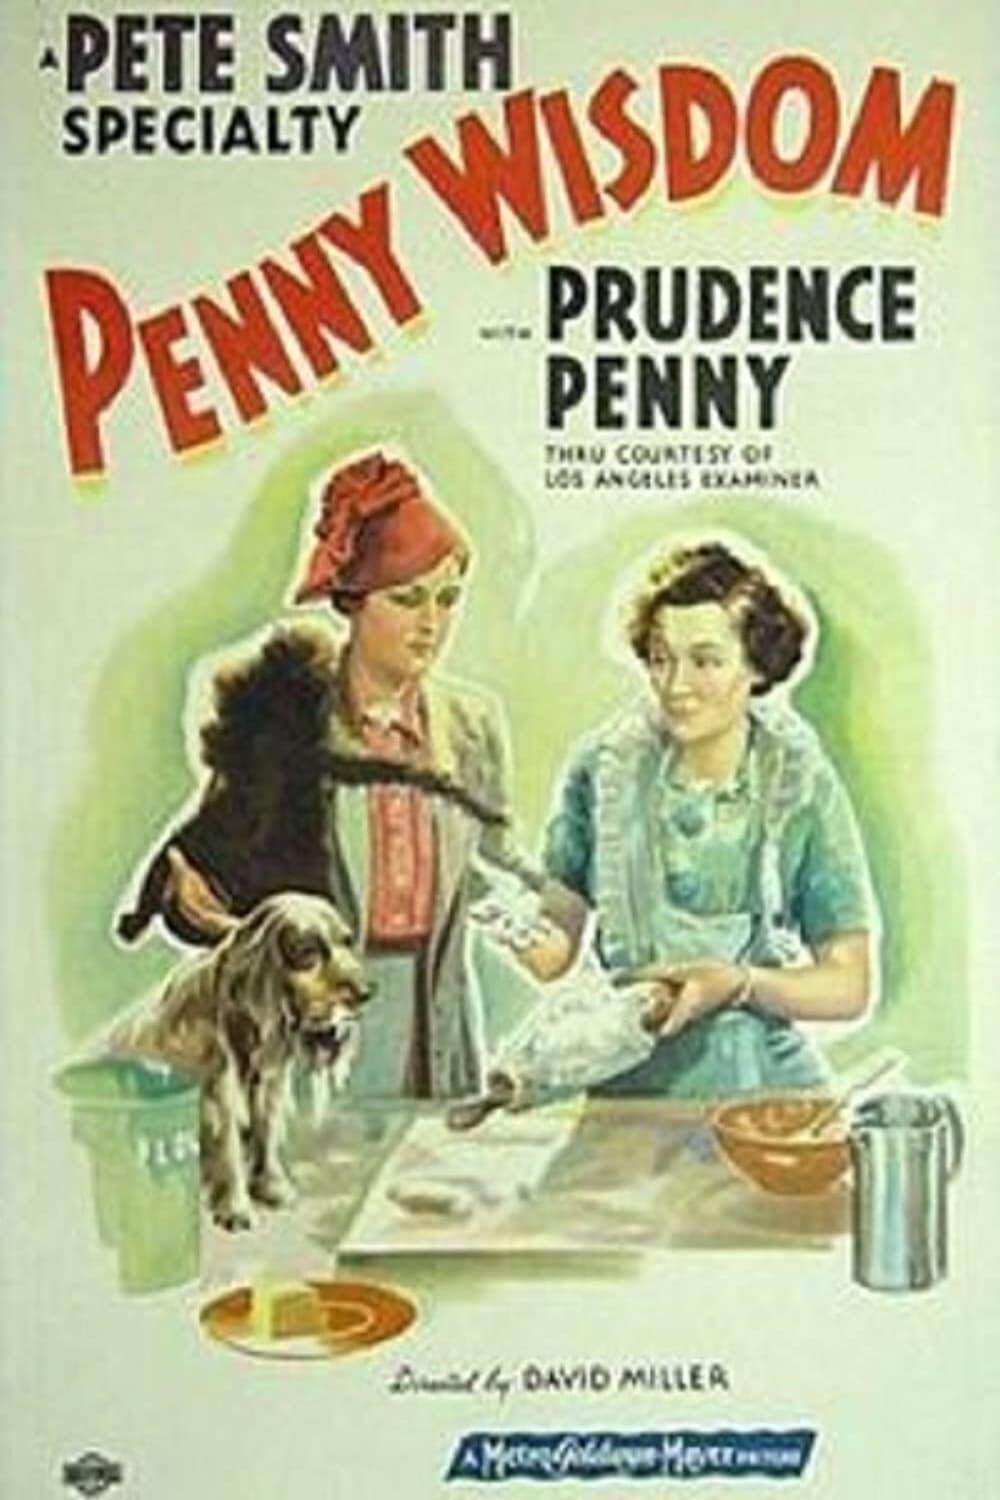 Penny Wisdom poster